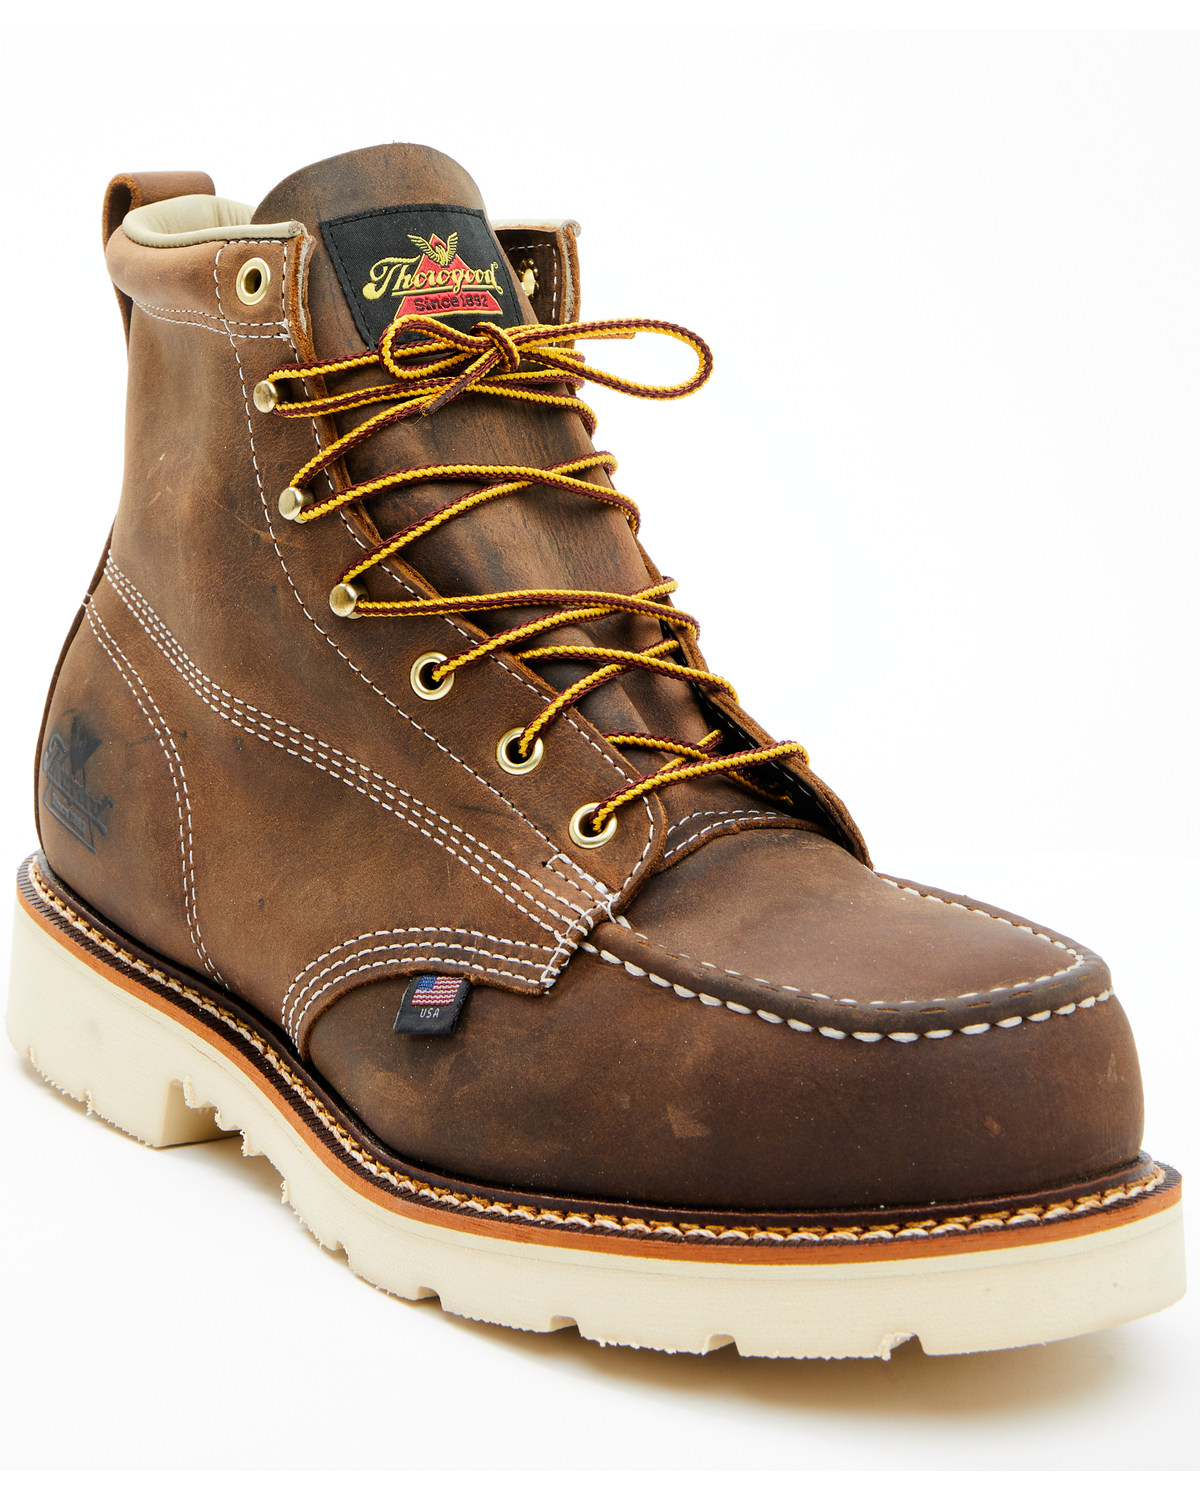 Thorogood Men's American Heritage Classics 6" Made The USA Work Boots - Steel Toe